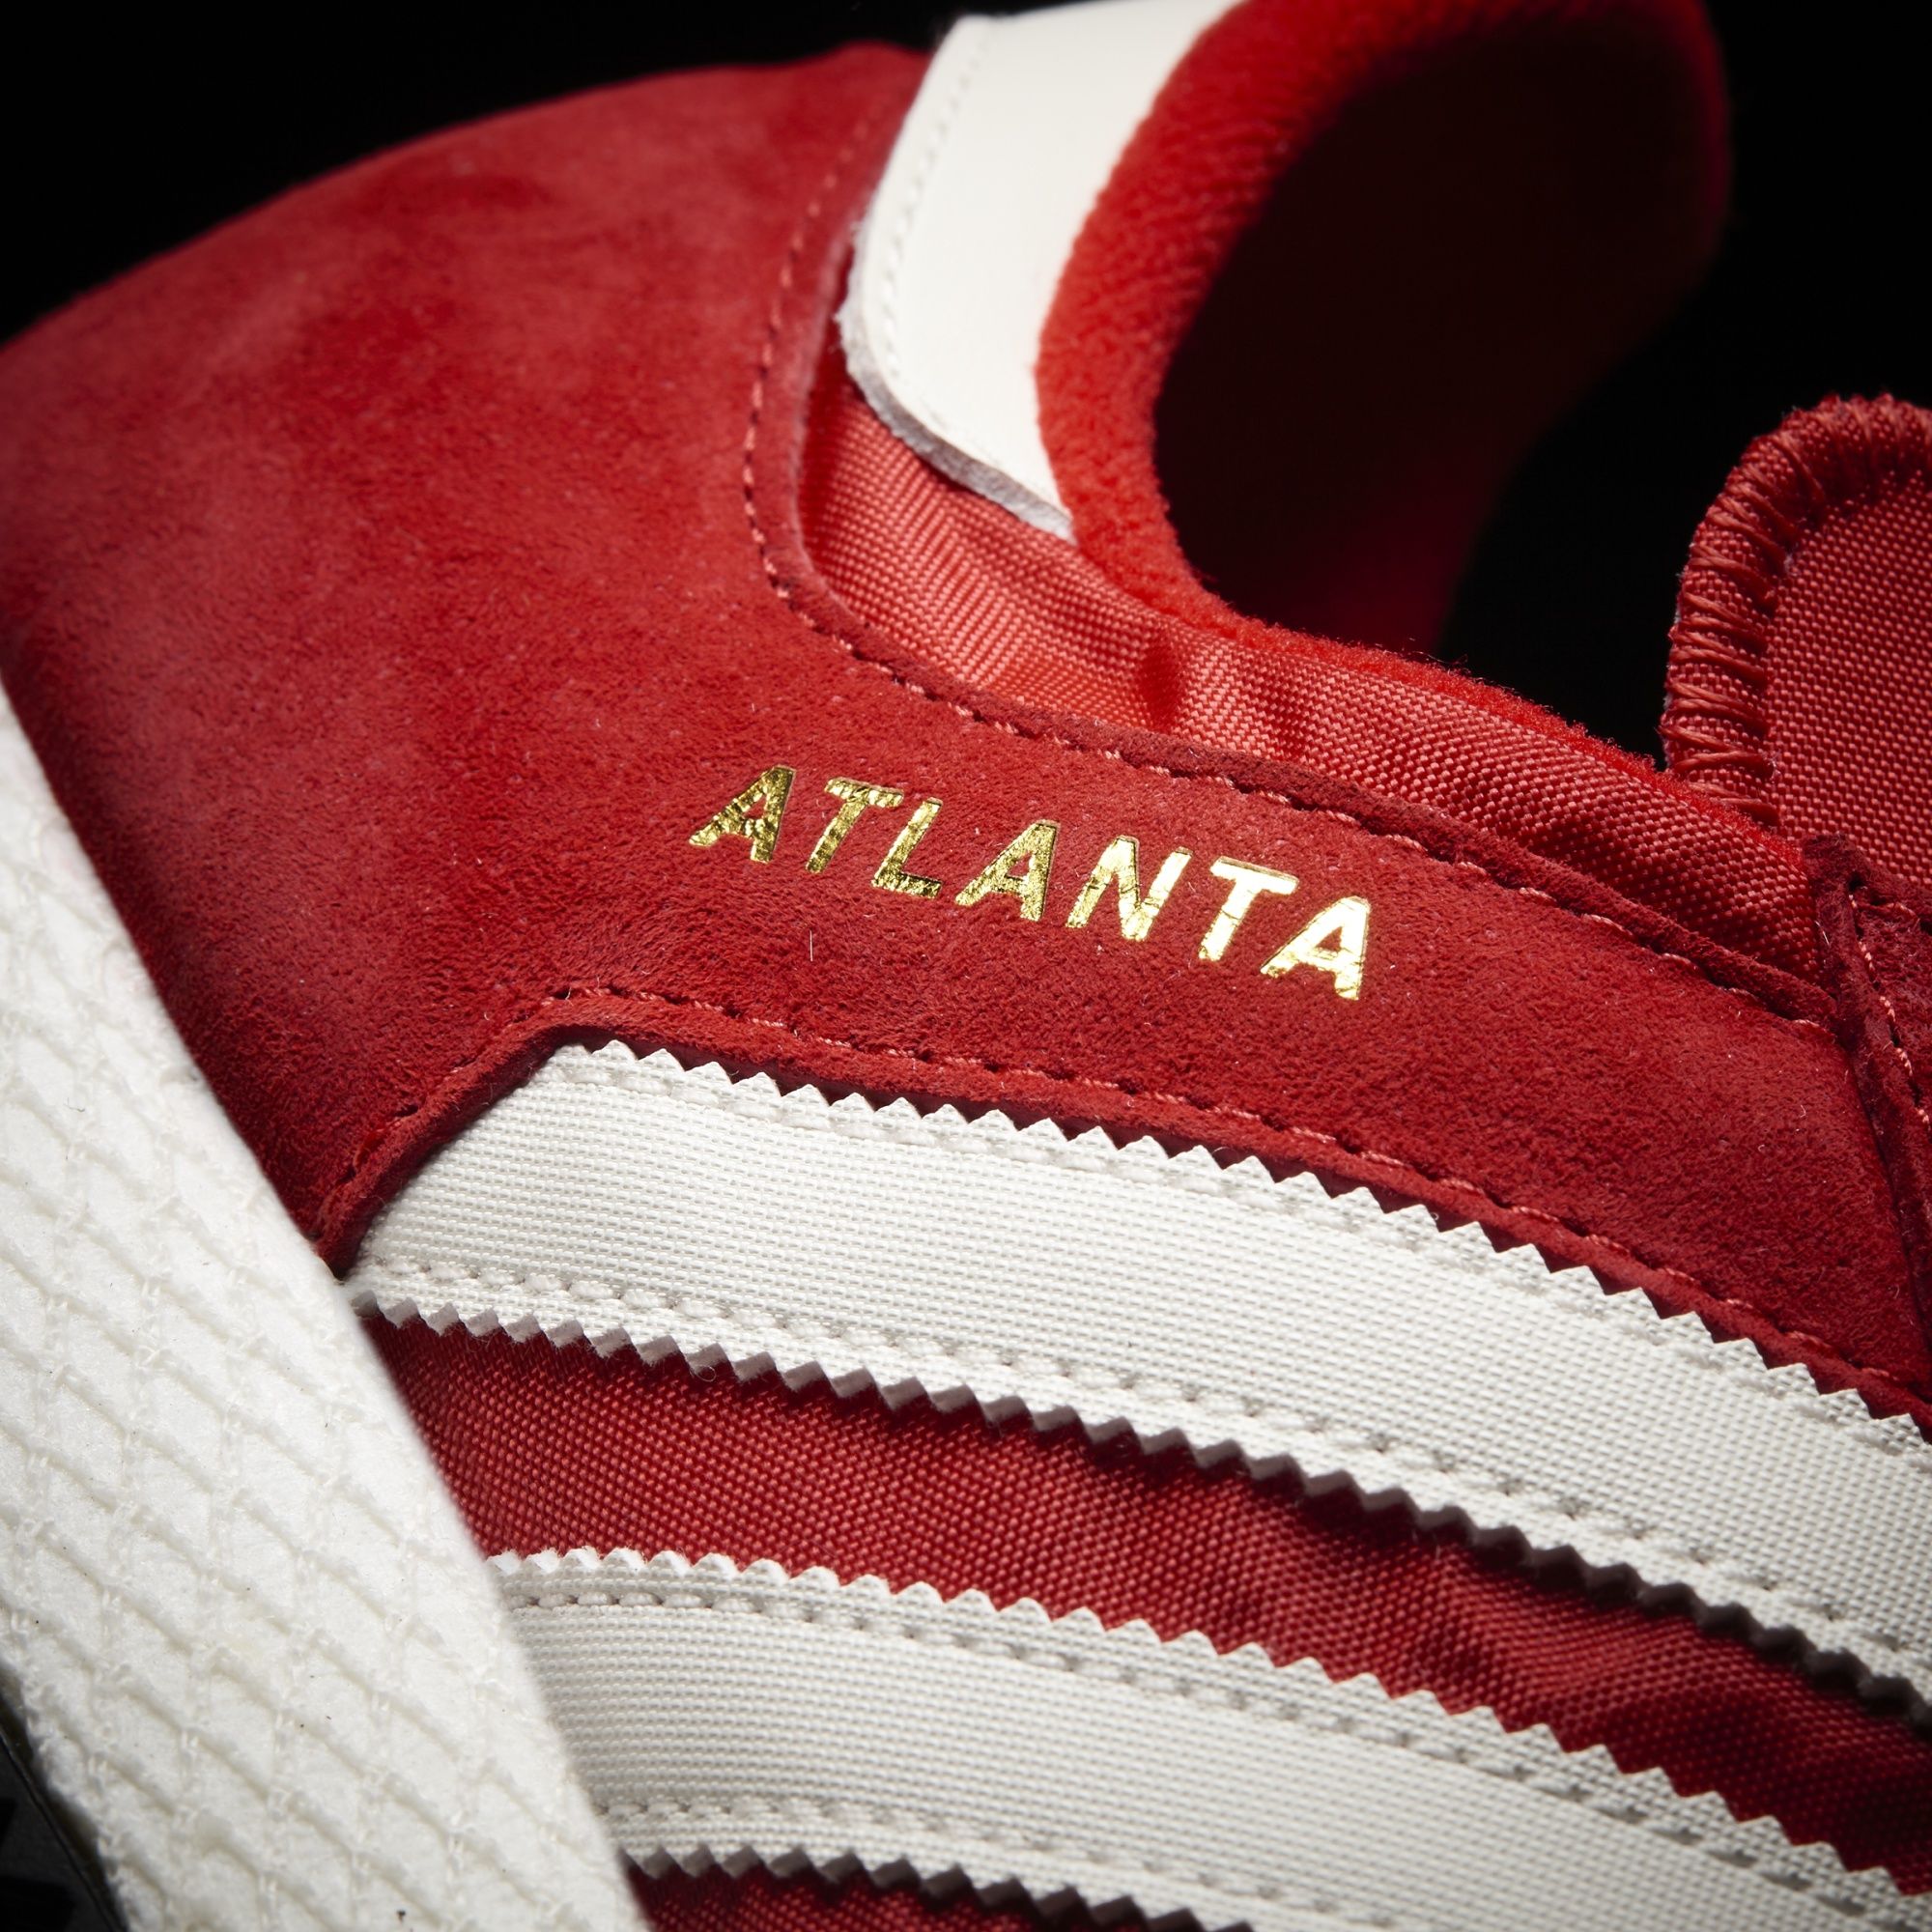 Adidas SPZL Atlanta
Scarlet / White